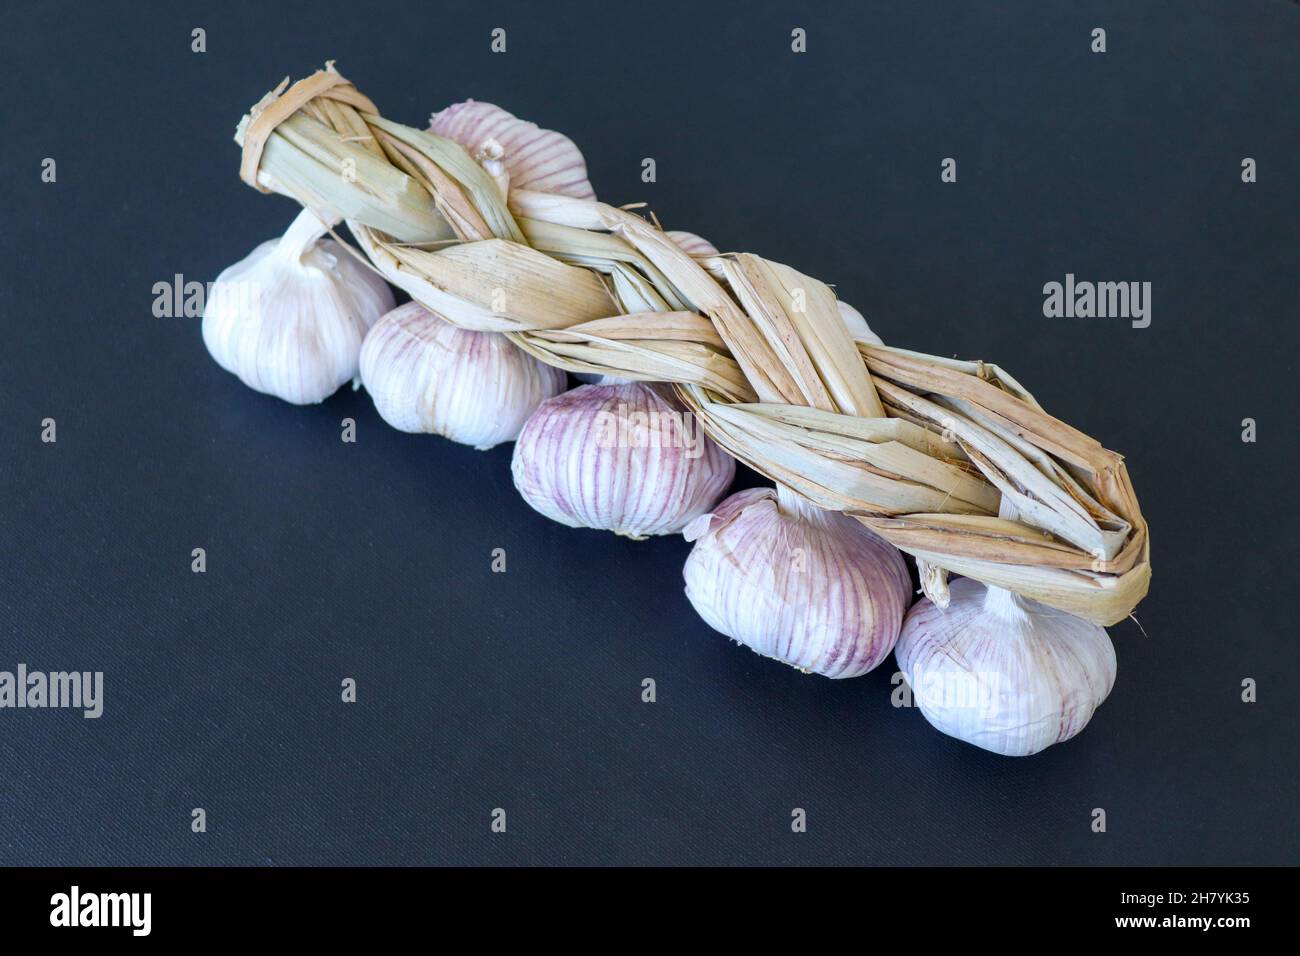 Garlic braid against black background Stock Photo